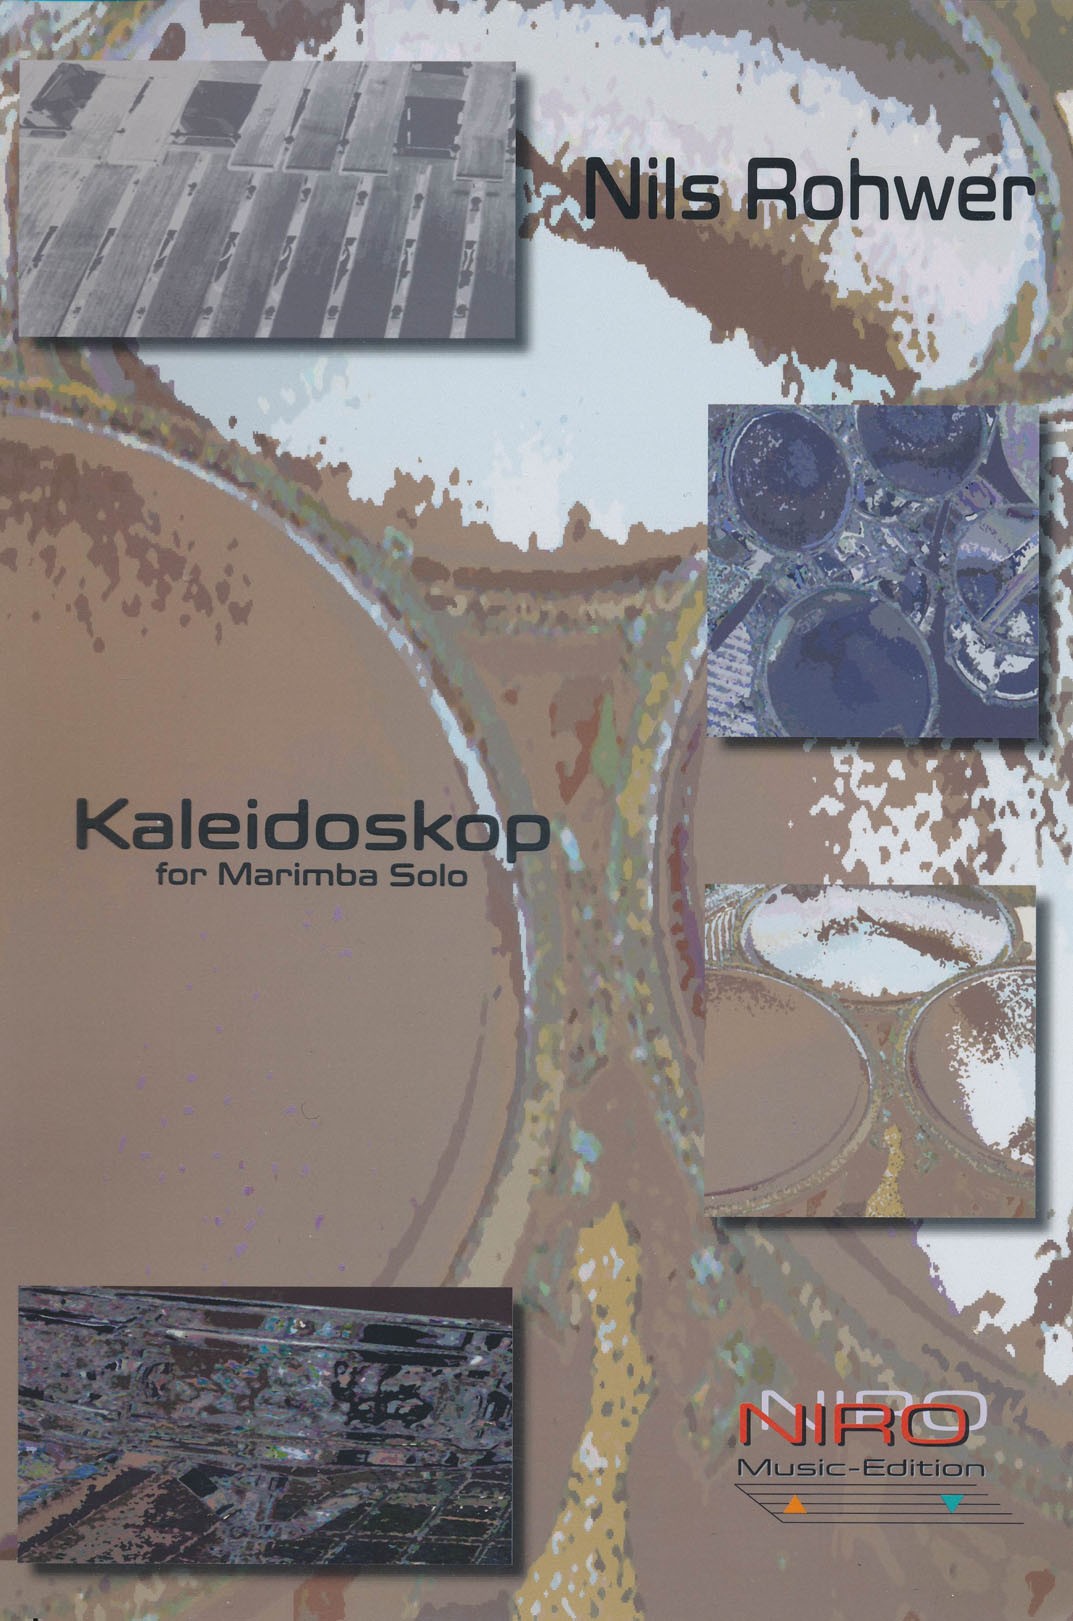 Kaleidoskop by Nils Rohwer